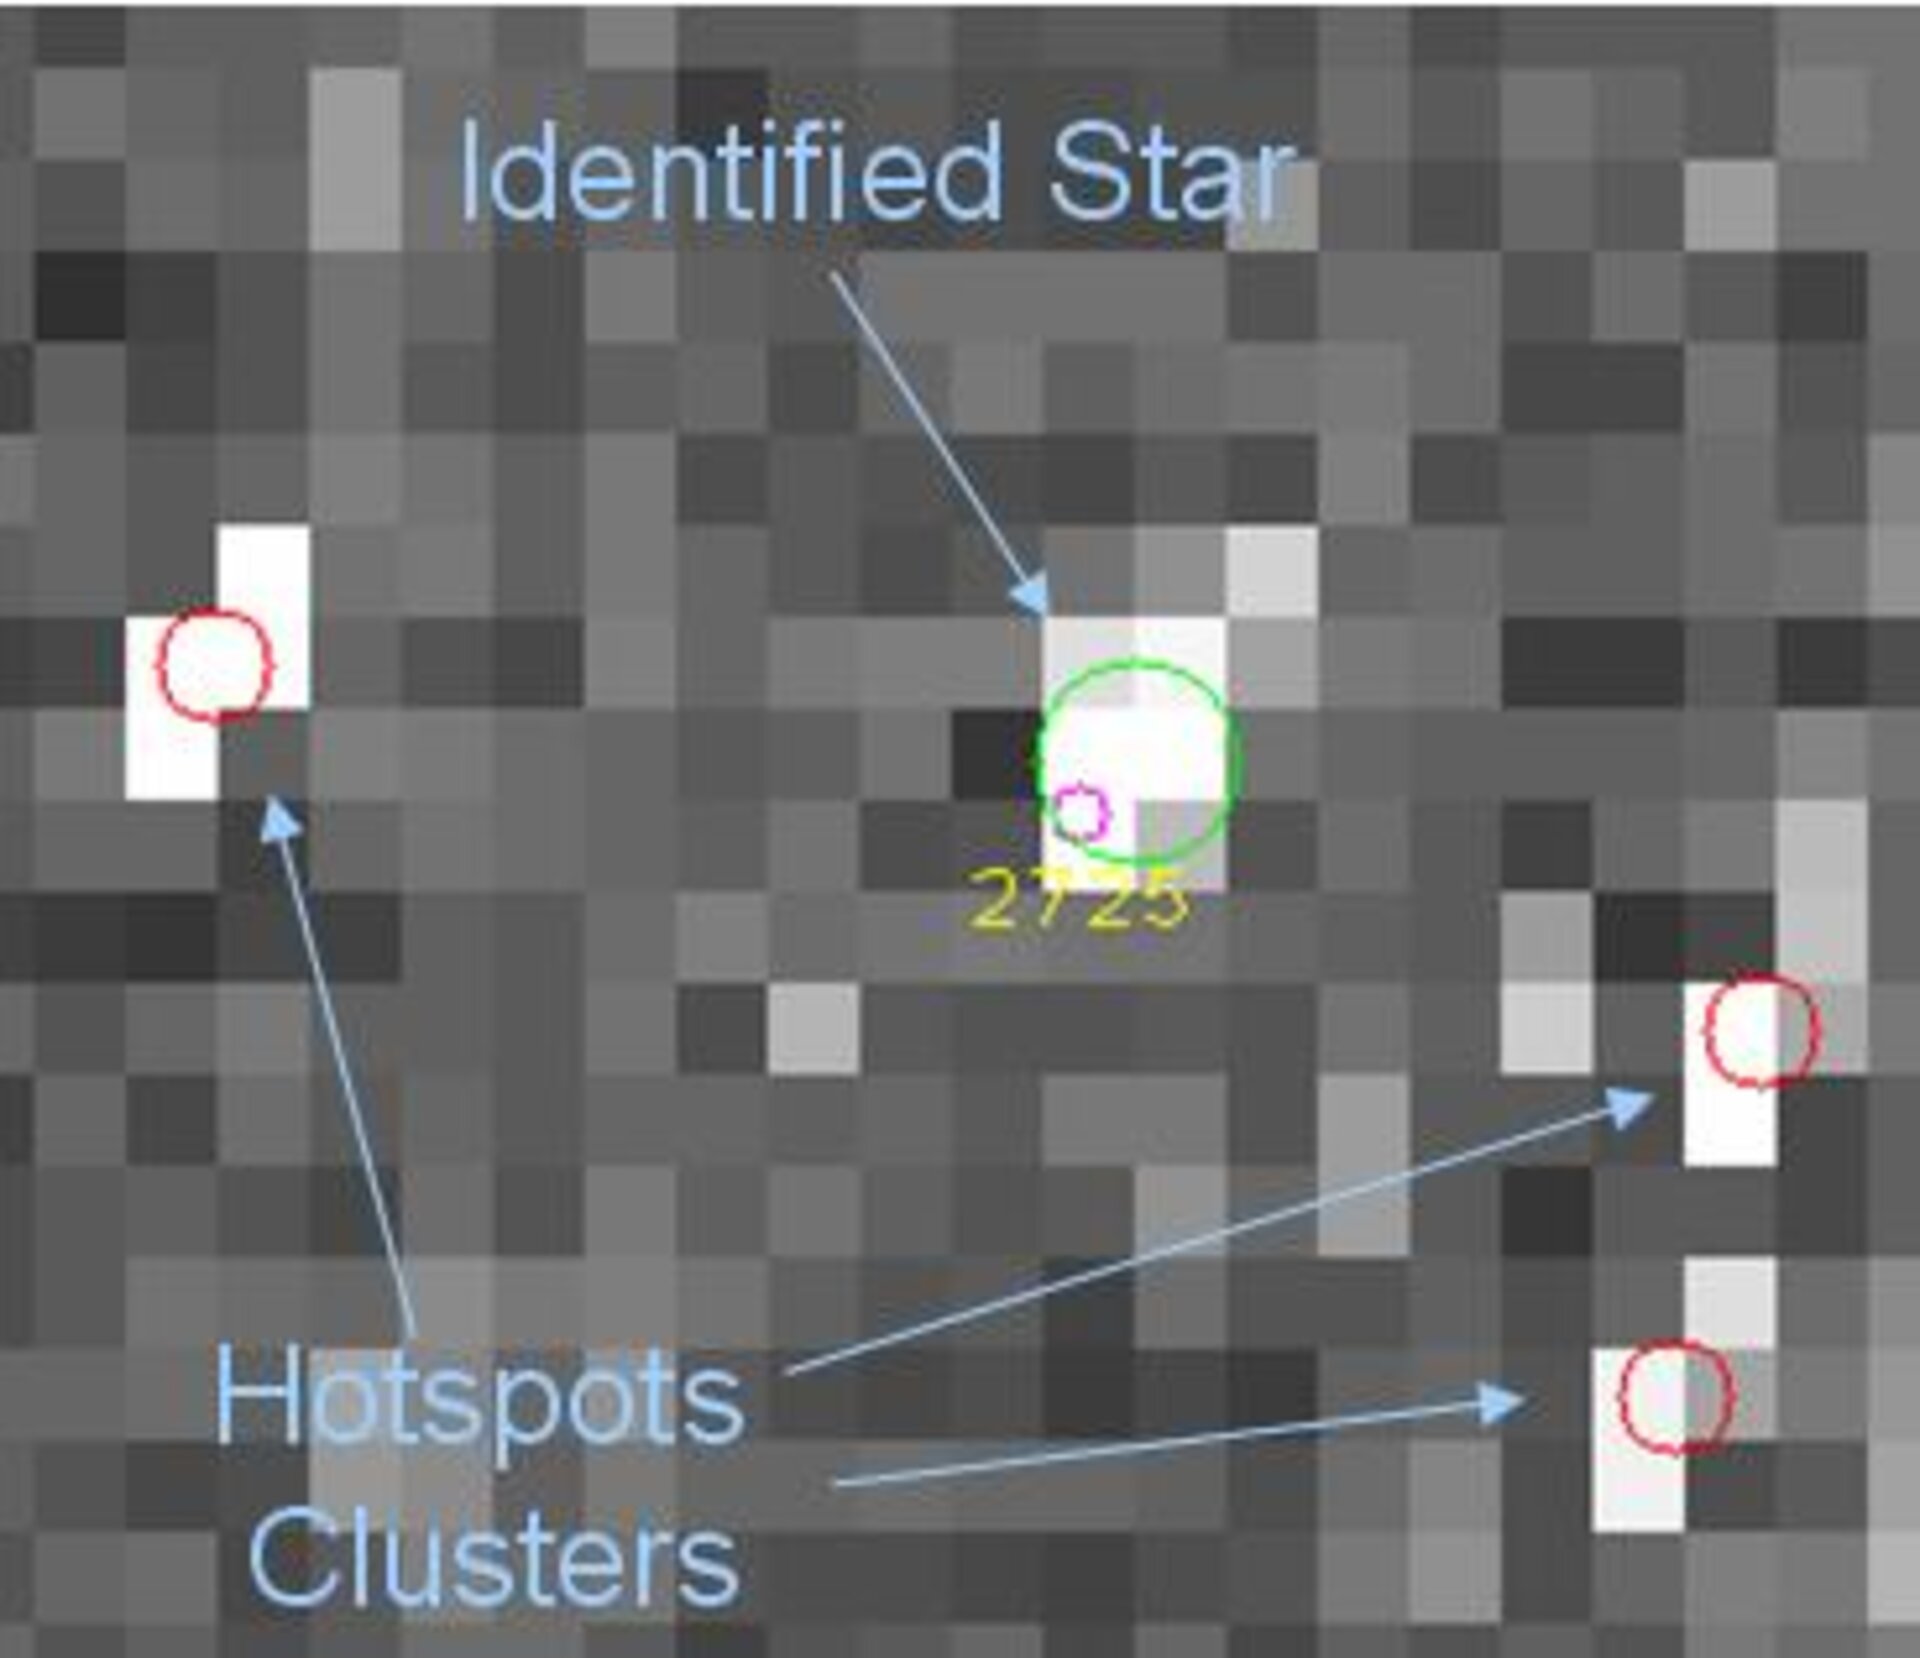 Hotspot clusters hide stars